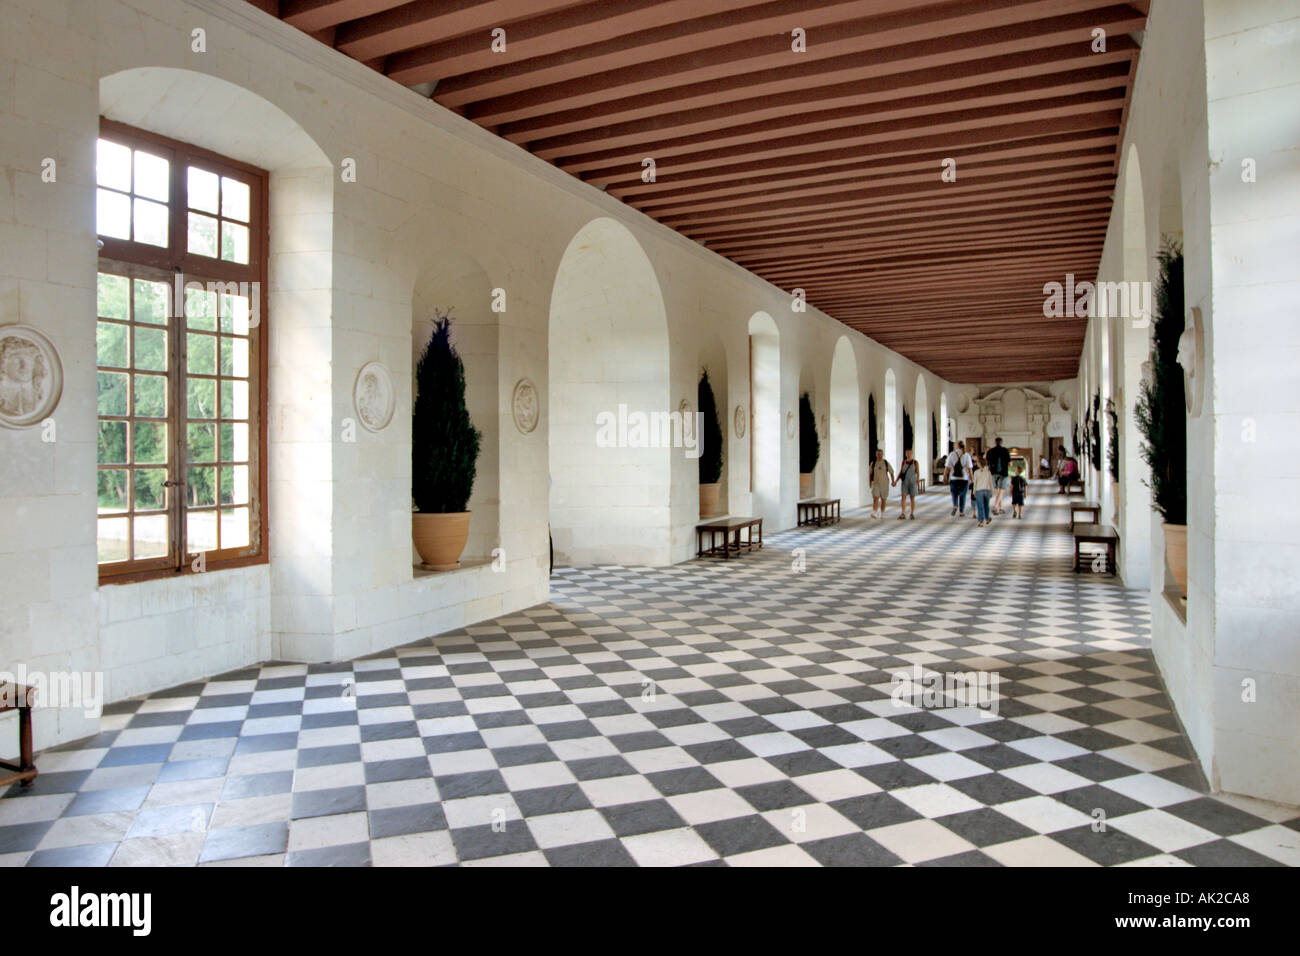 Chateau Chenonceau Gallery Immagini e Fotos Stock - Alamy